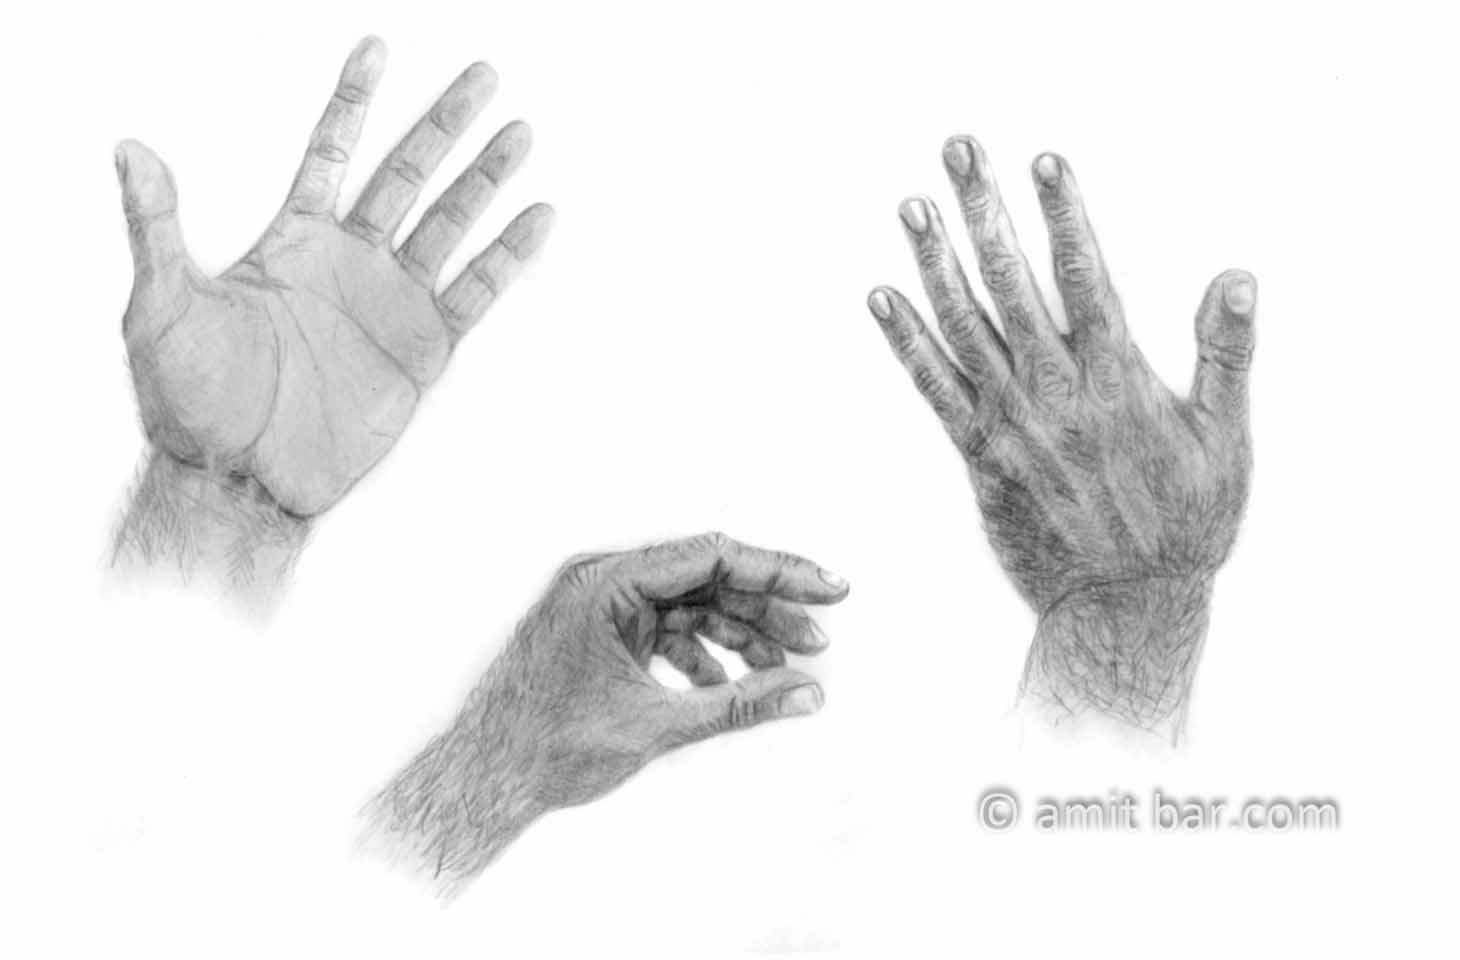 Hands: My left hand three times. Pencils